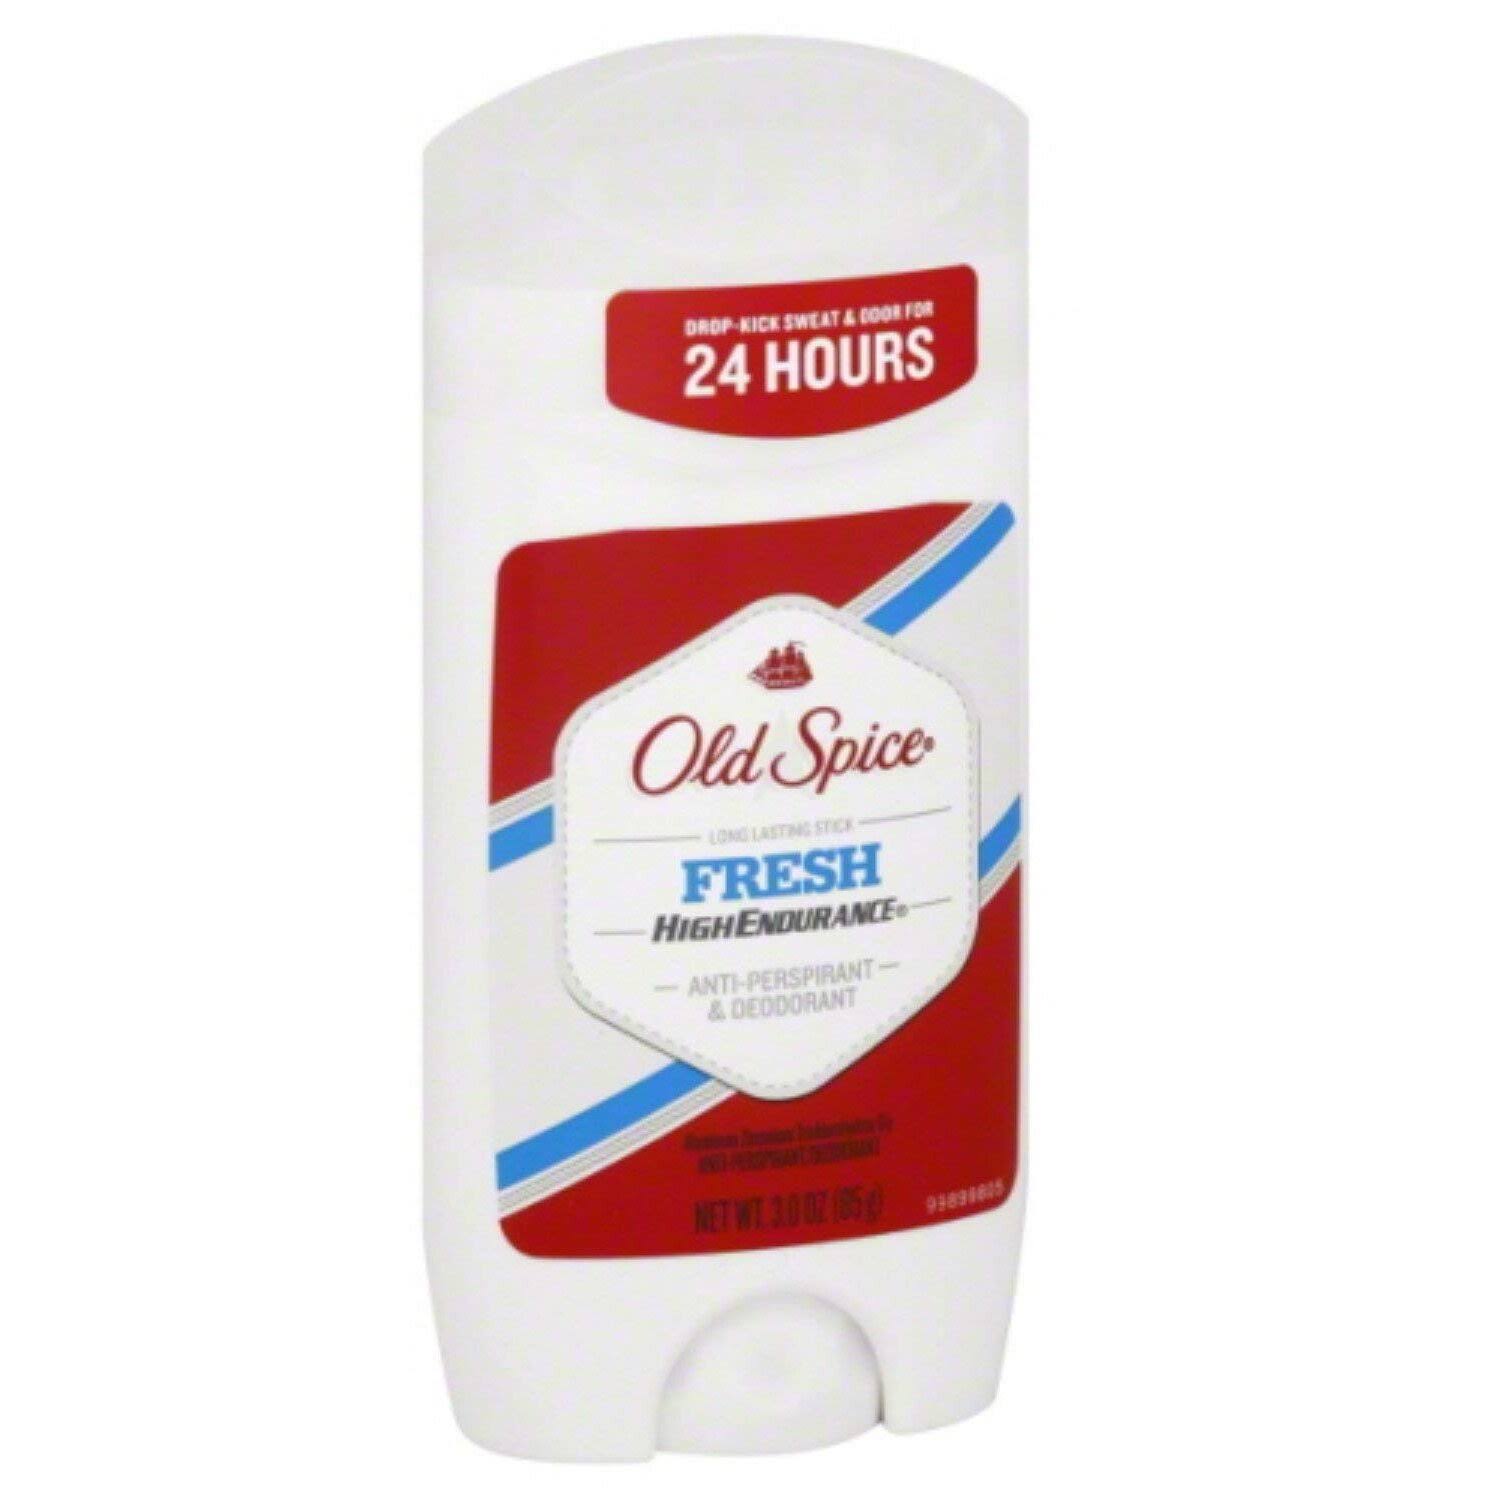 Old Spice High Endurance Anti-Perspirant & Deodorant - 3oz, Fresh